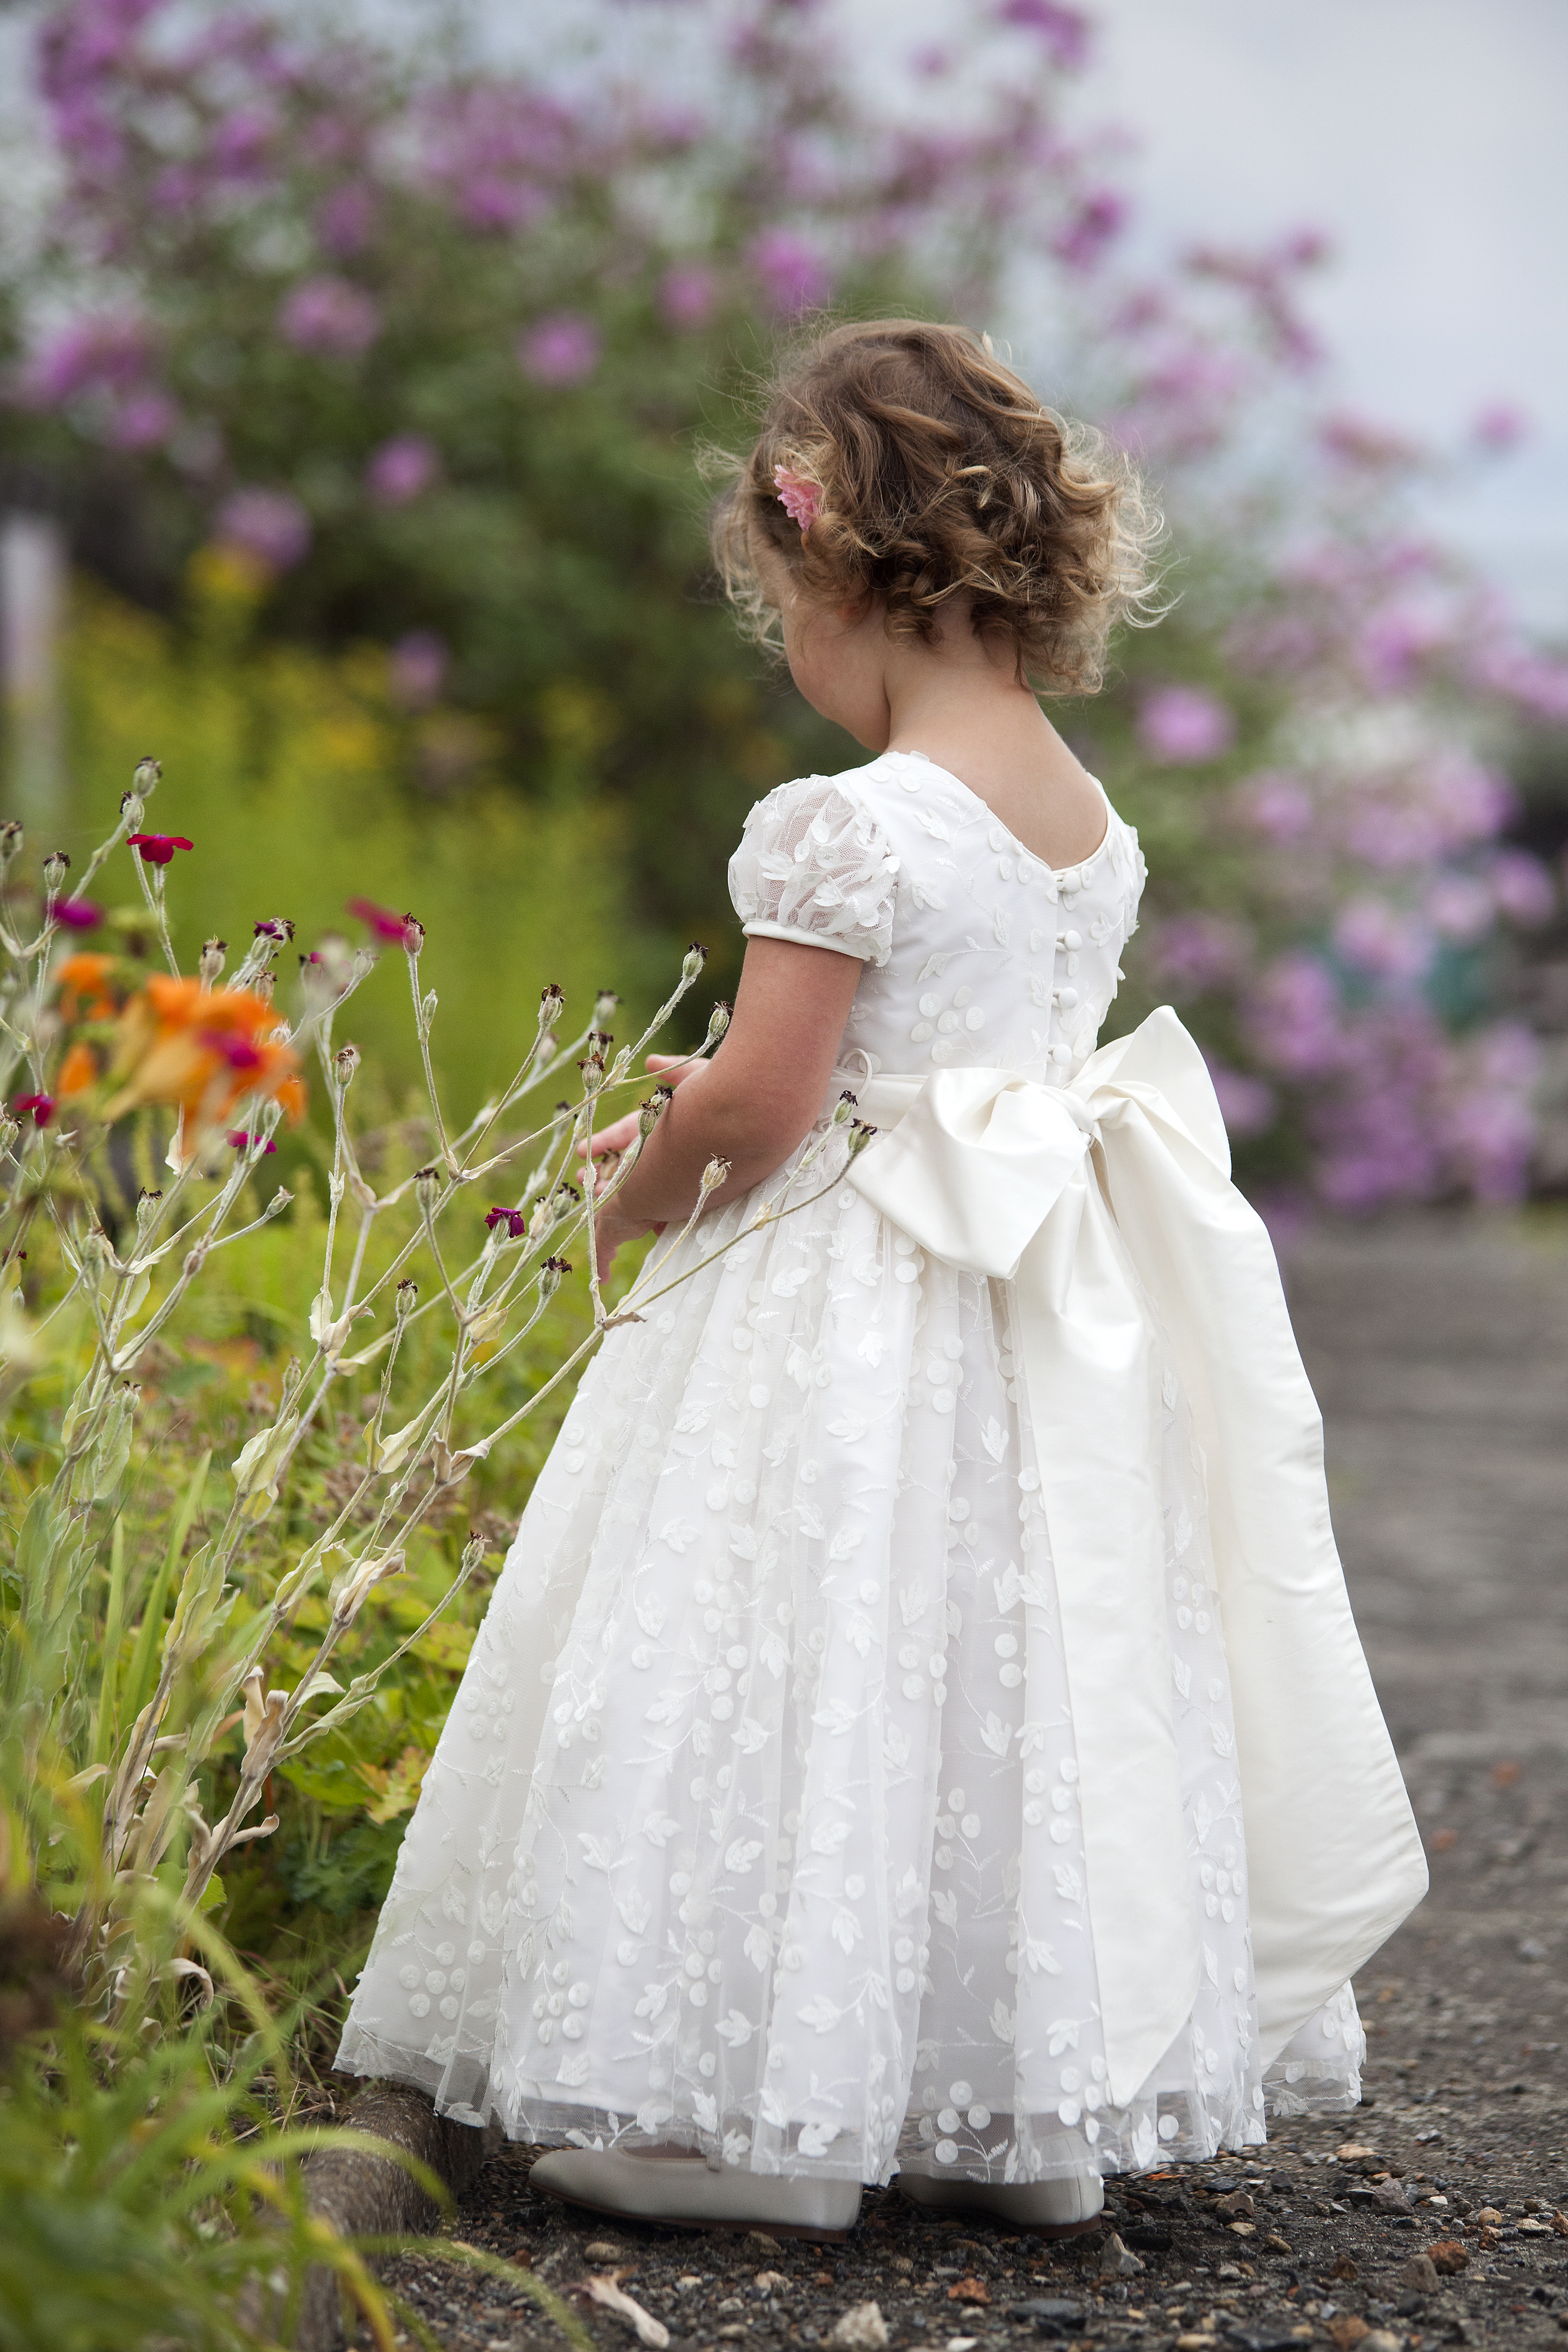 Flowergirl dress by Nicki Macfarlane